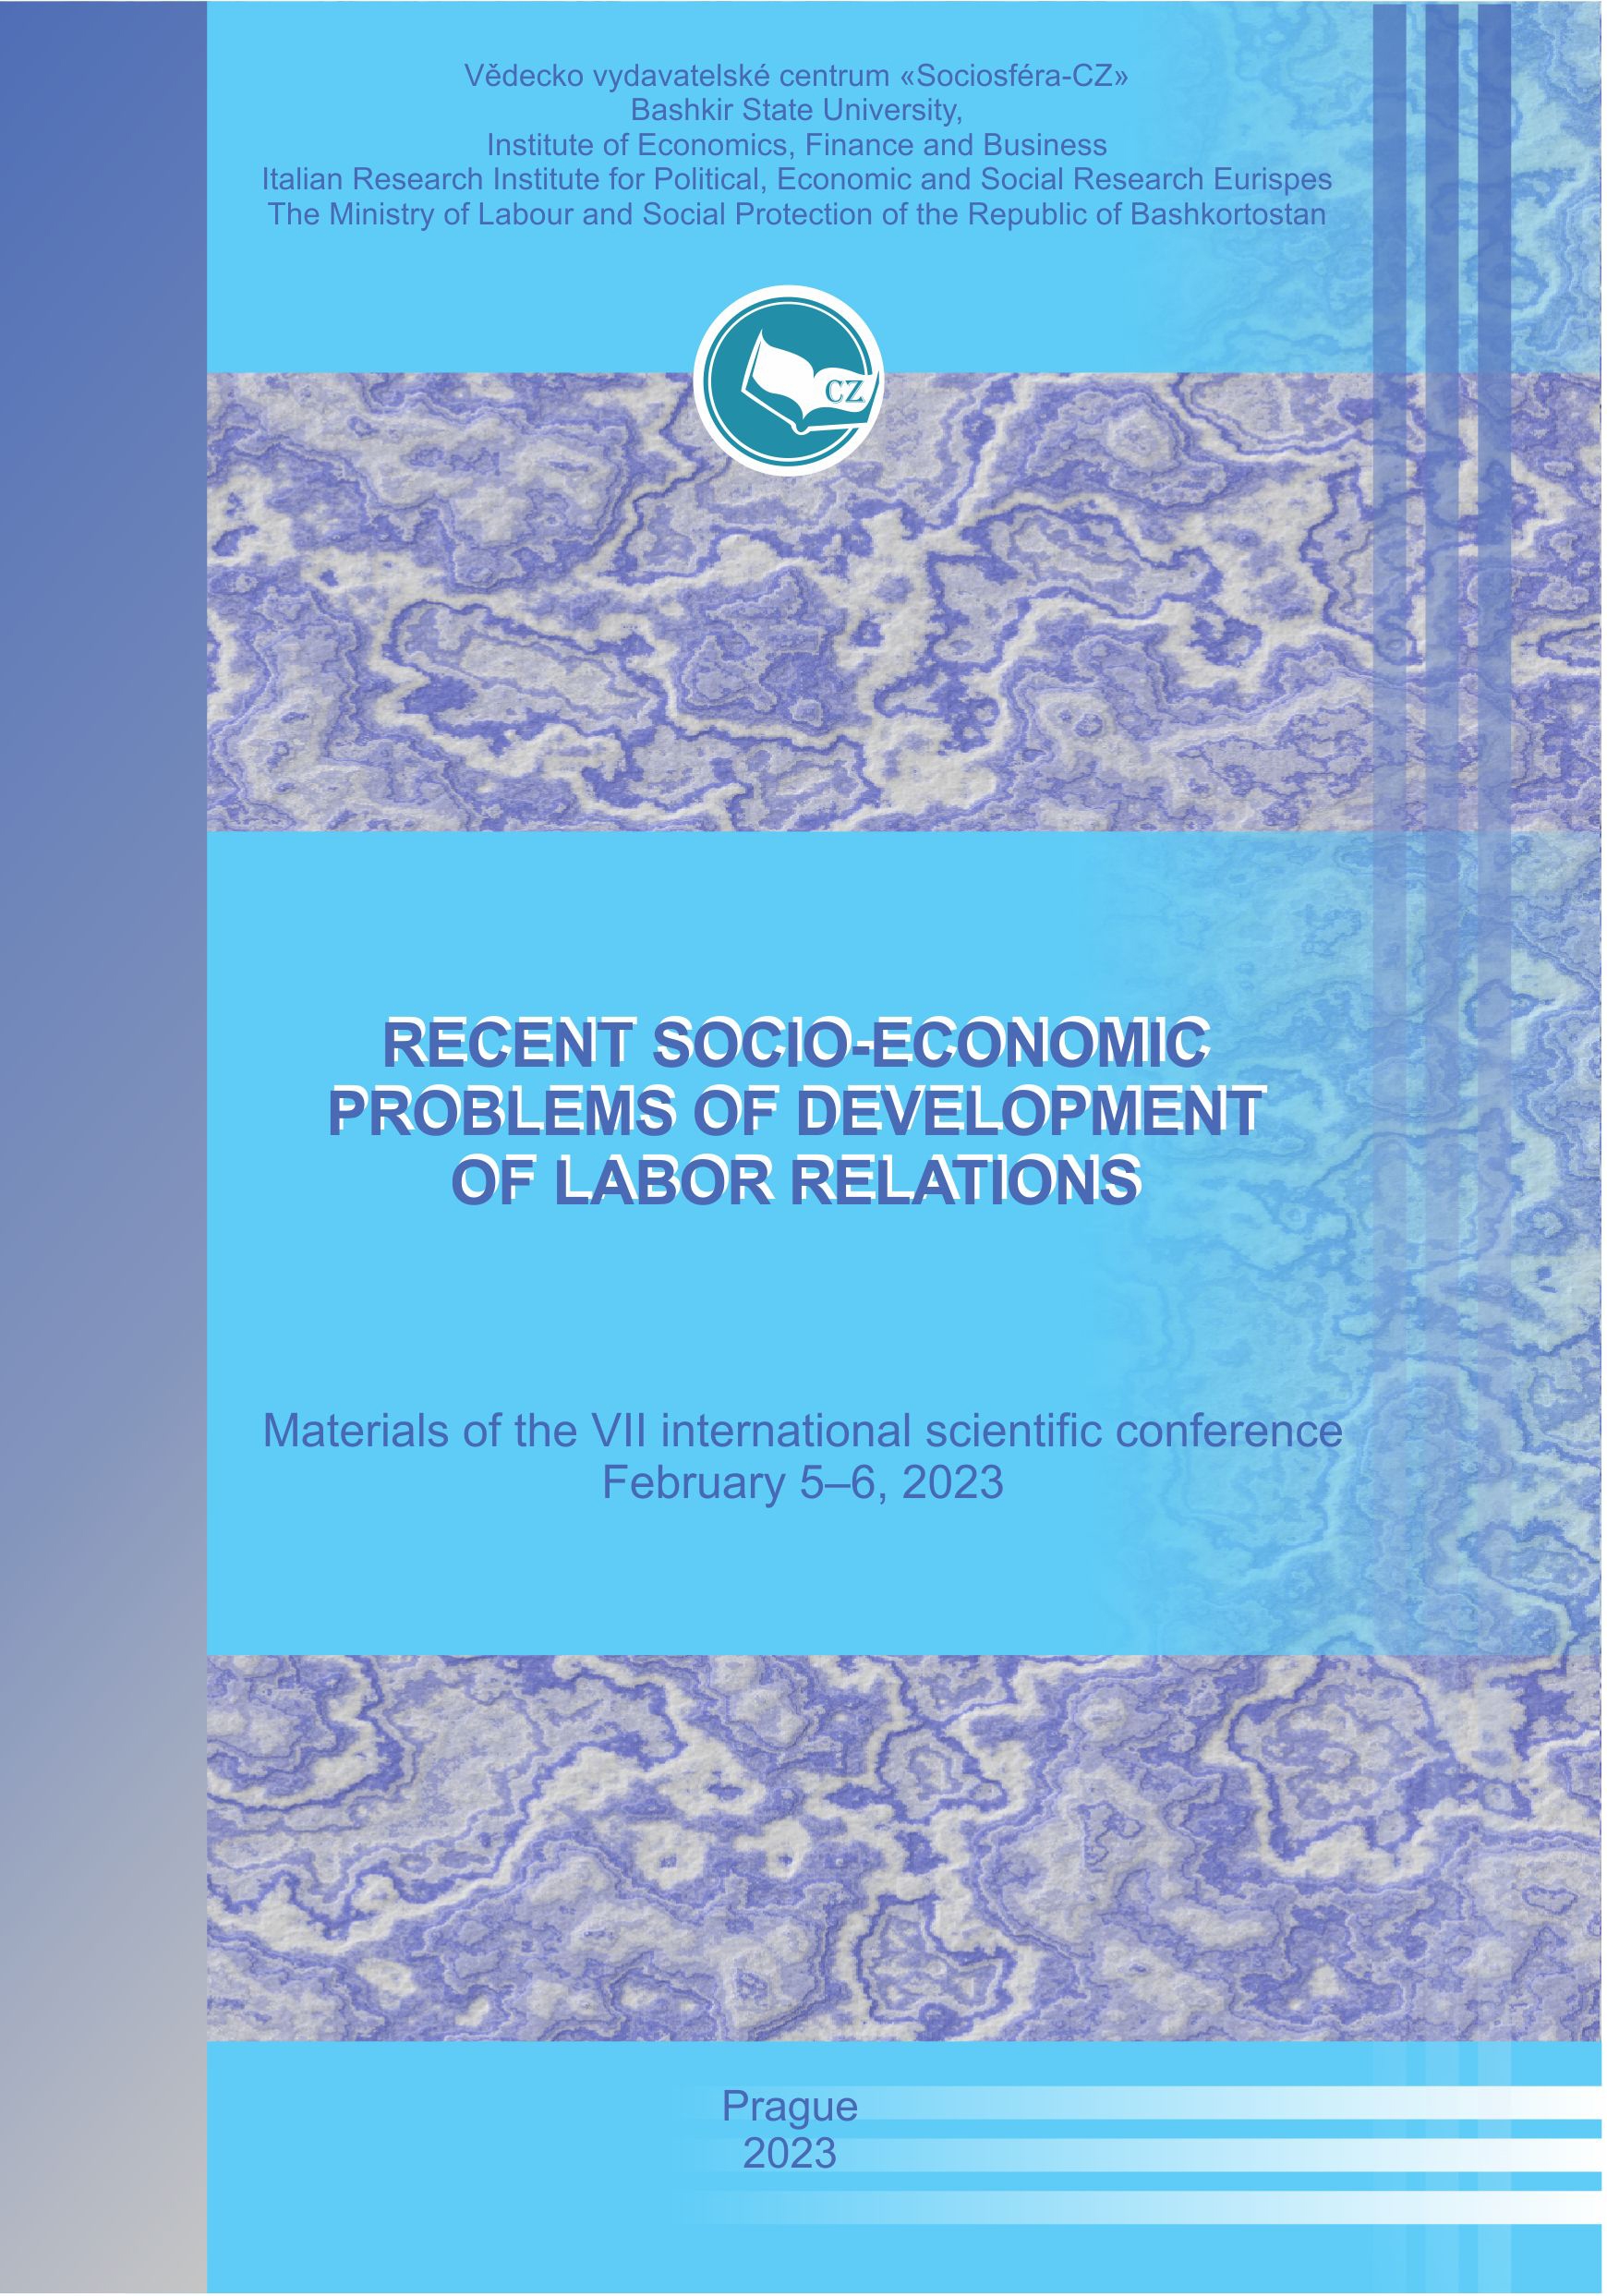 Recent socio-economic problems of development of labor relations